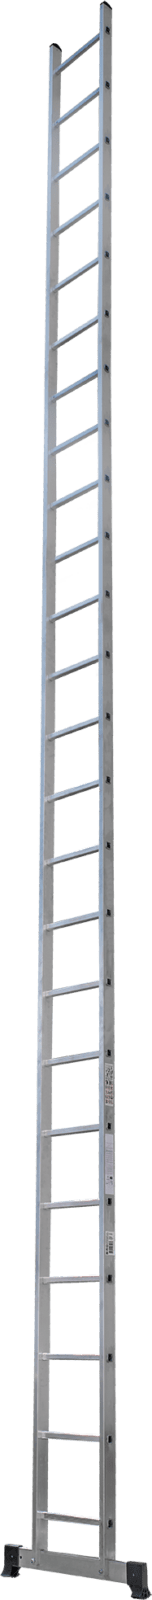 Лестница алюминиевая приставная NV1210 артикул 1210124